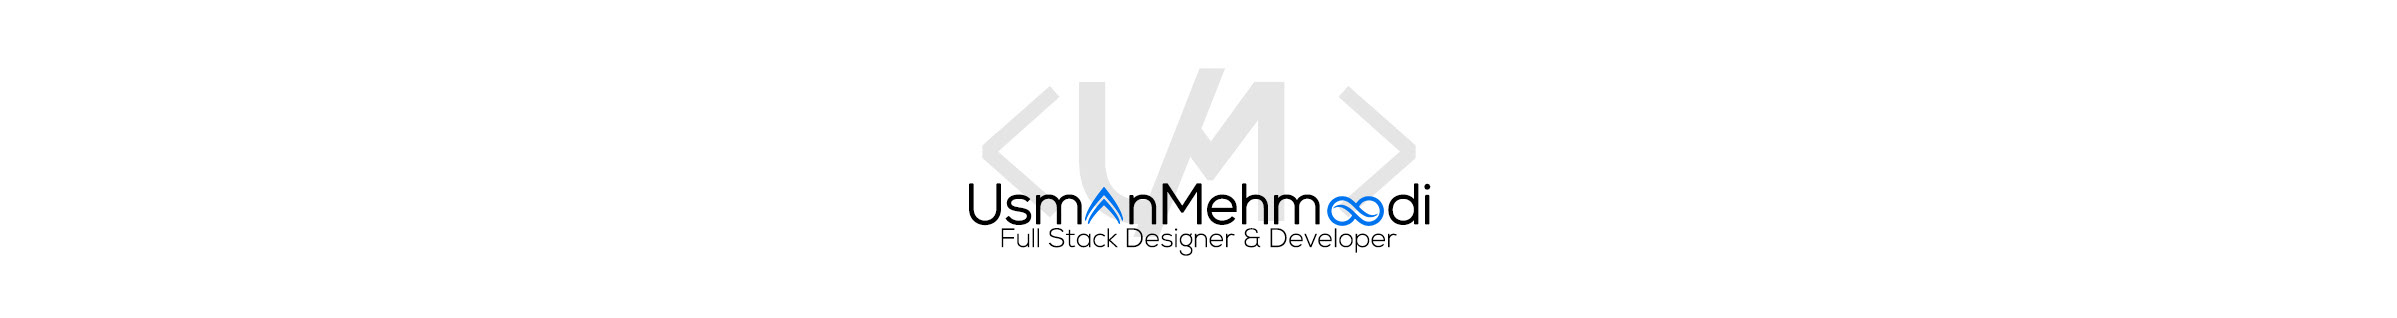 Usman Mehmoodi's profile banner